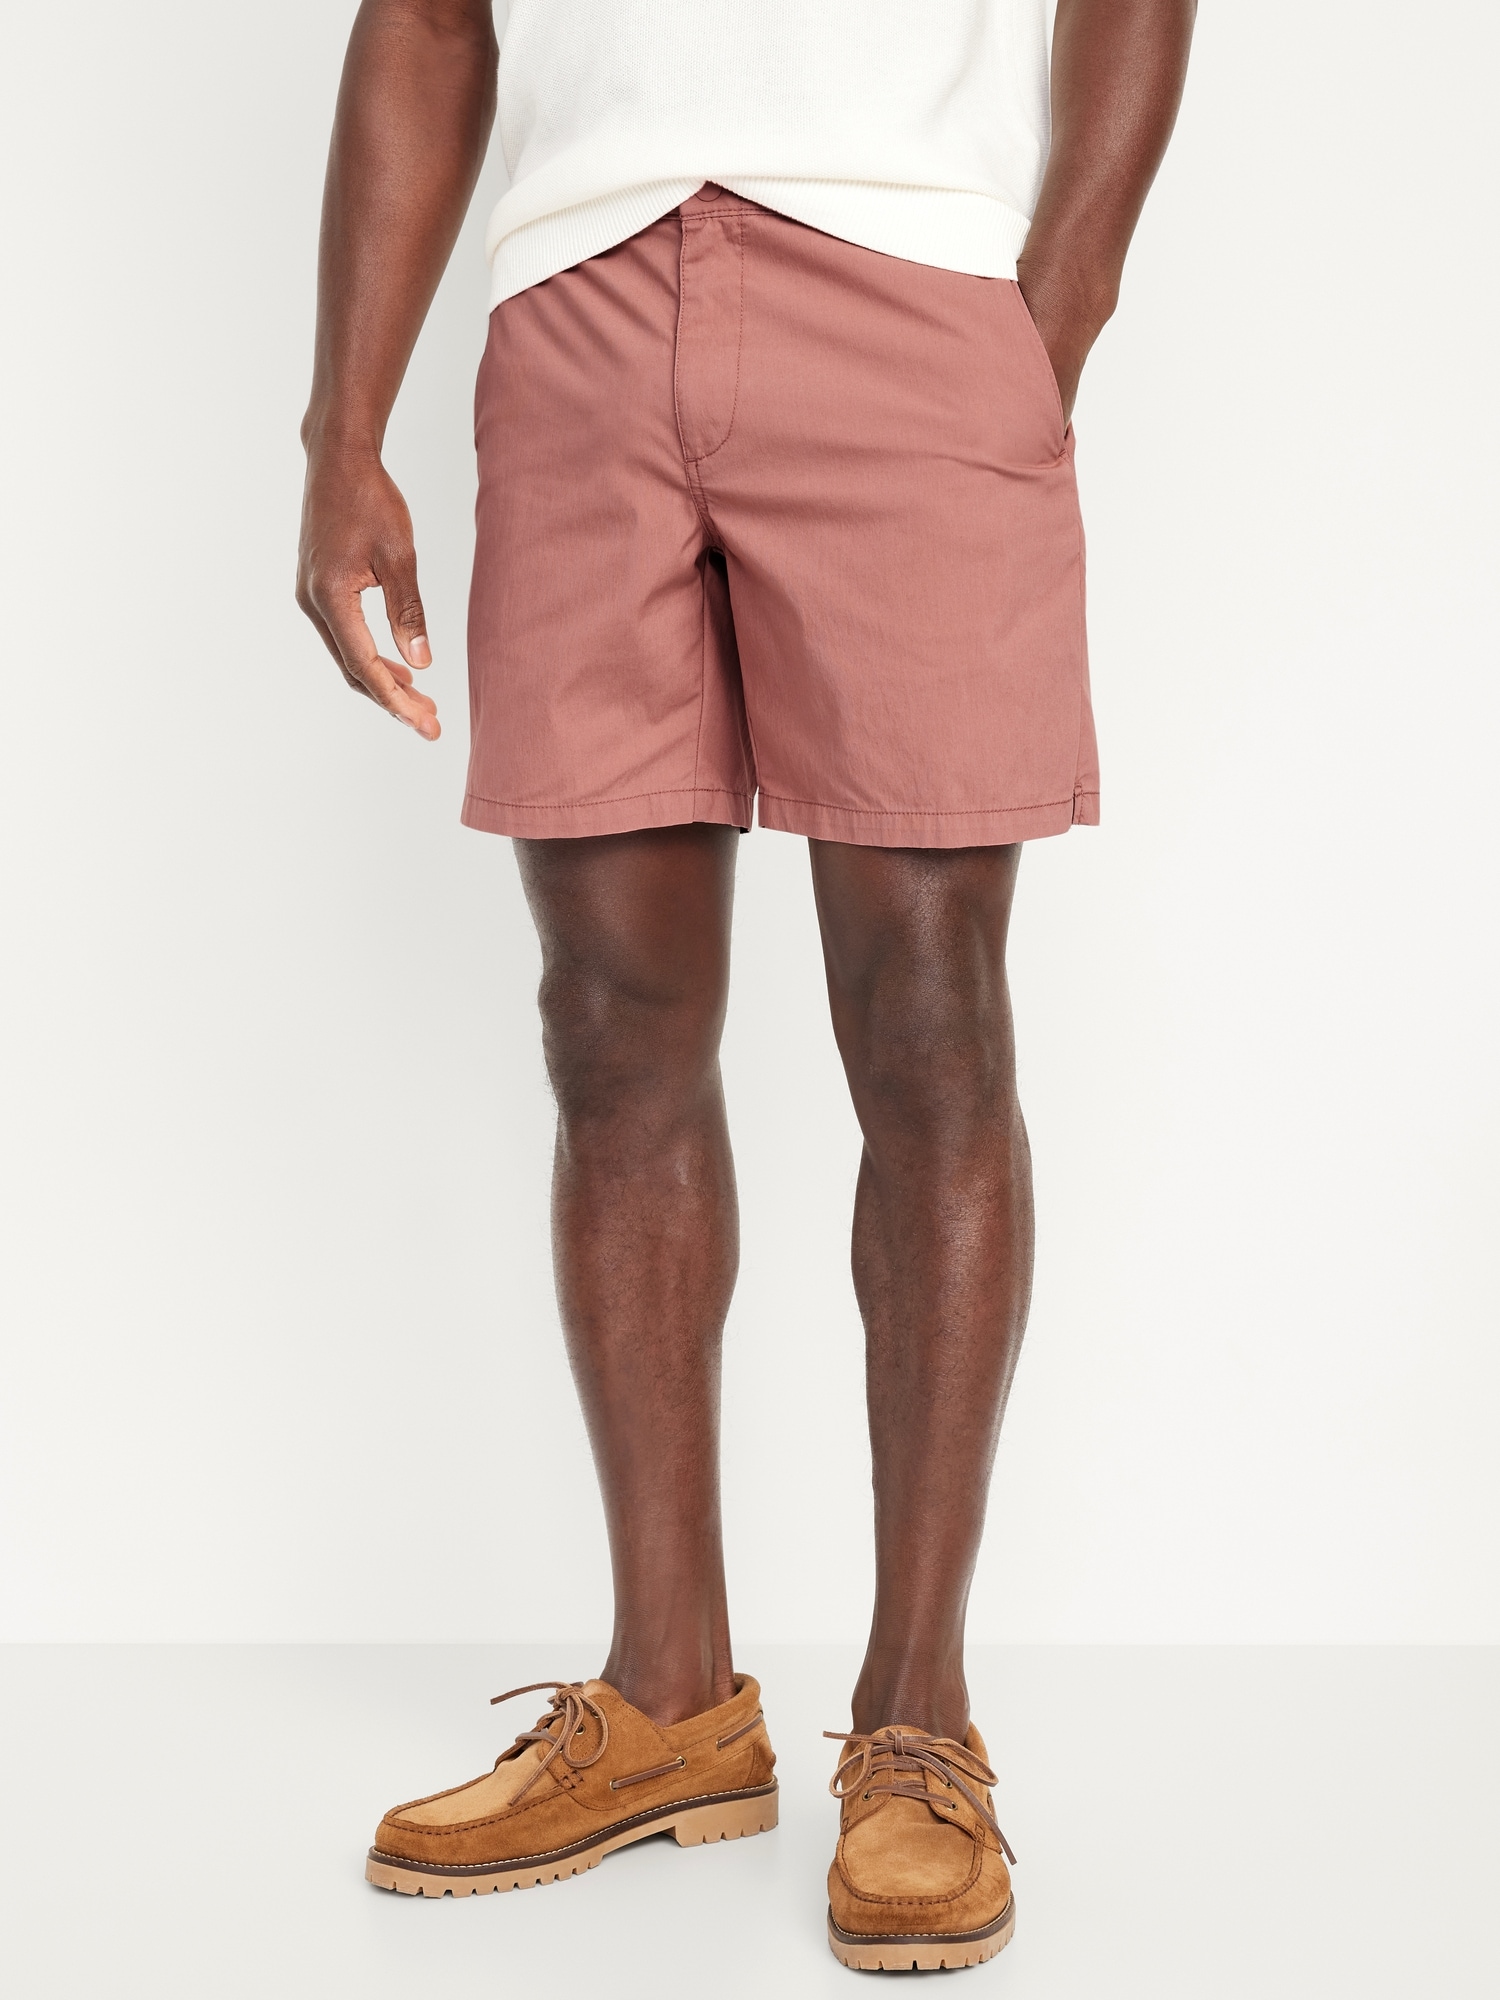 Slim Built-In Flex Tech Jogger Shorts -- 7-inch inseam Hot Deal